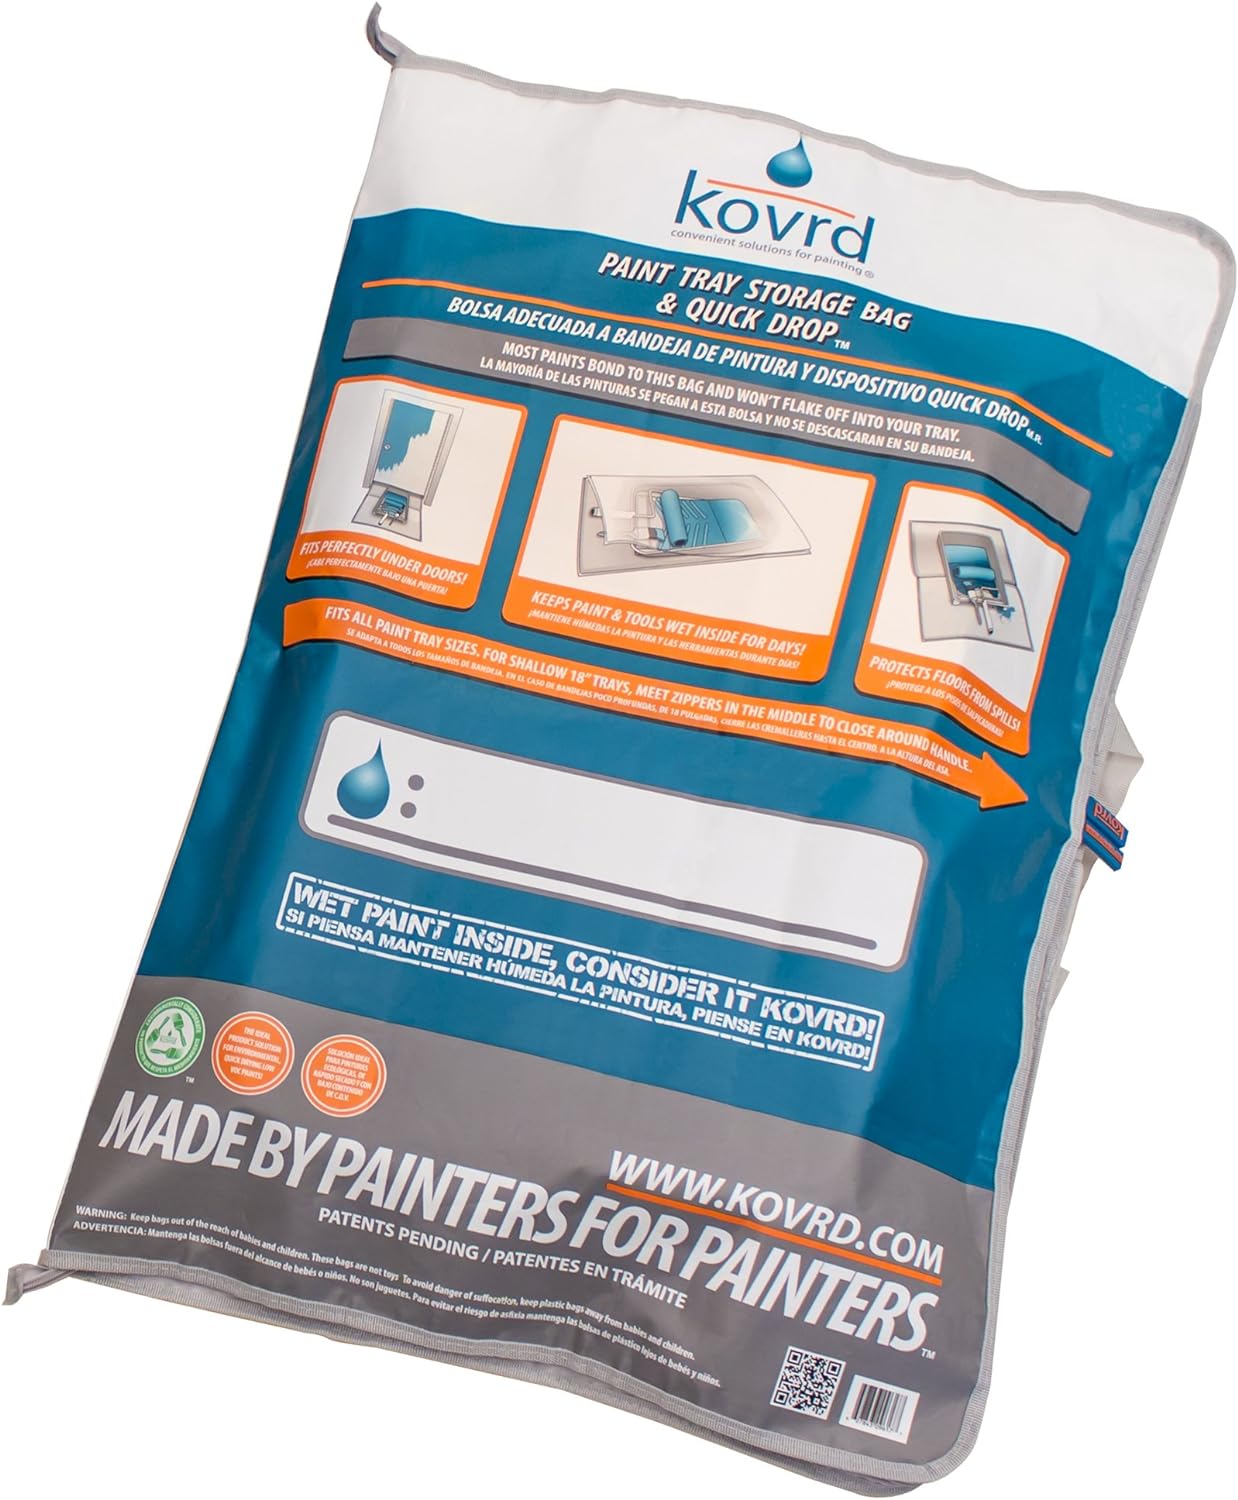 Kirby Kovrd Paint Tray Storage Bag and Quick Drop, Drop Sheet, Paint Tools Storage Bag